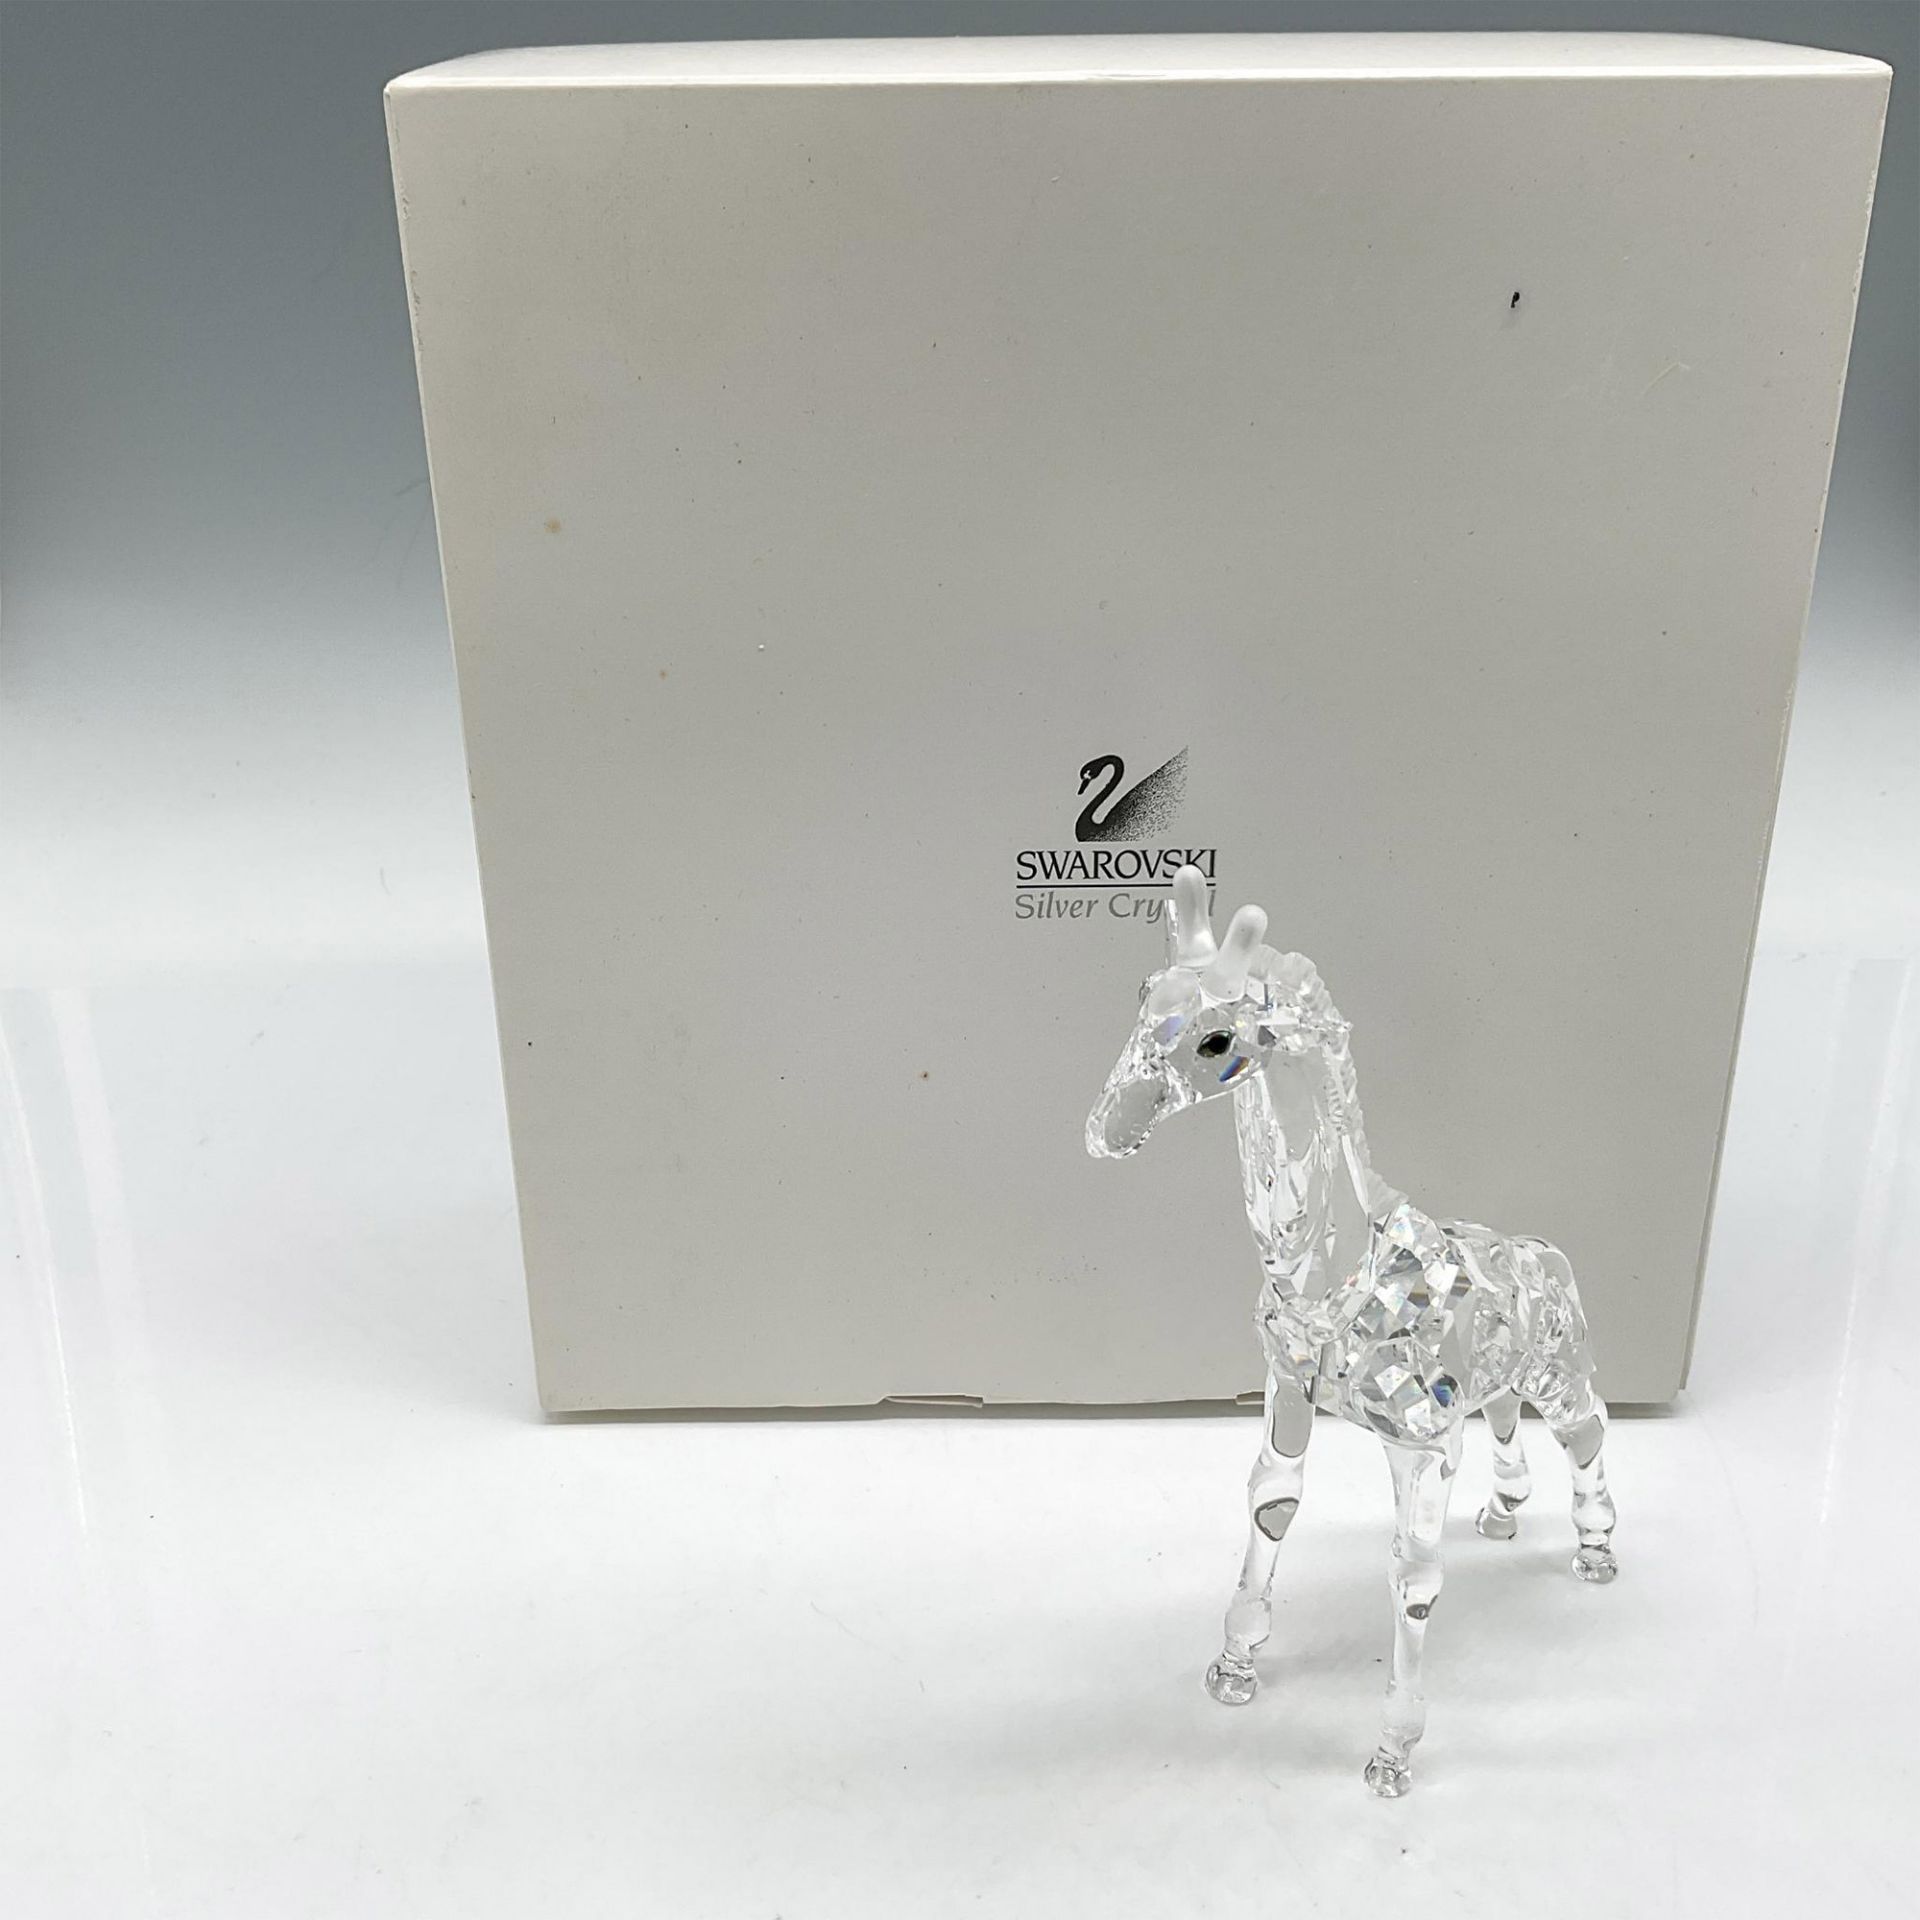 Swarovski Silver Crystal Figurine, Baby Giraffe - Image 4 of 4